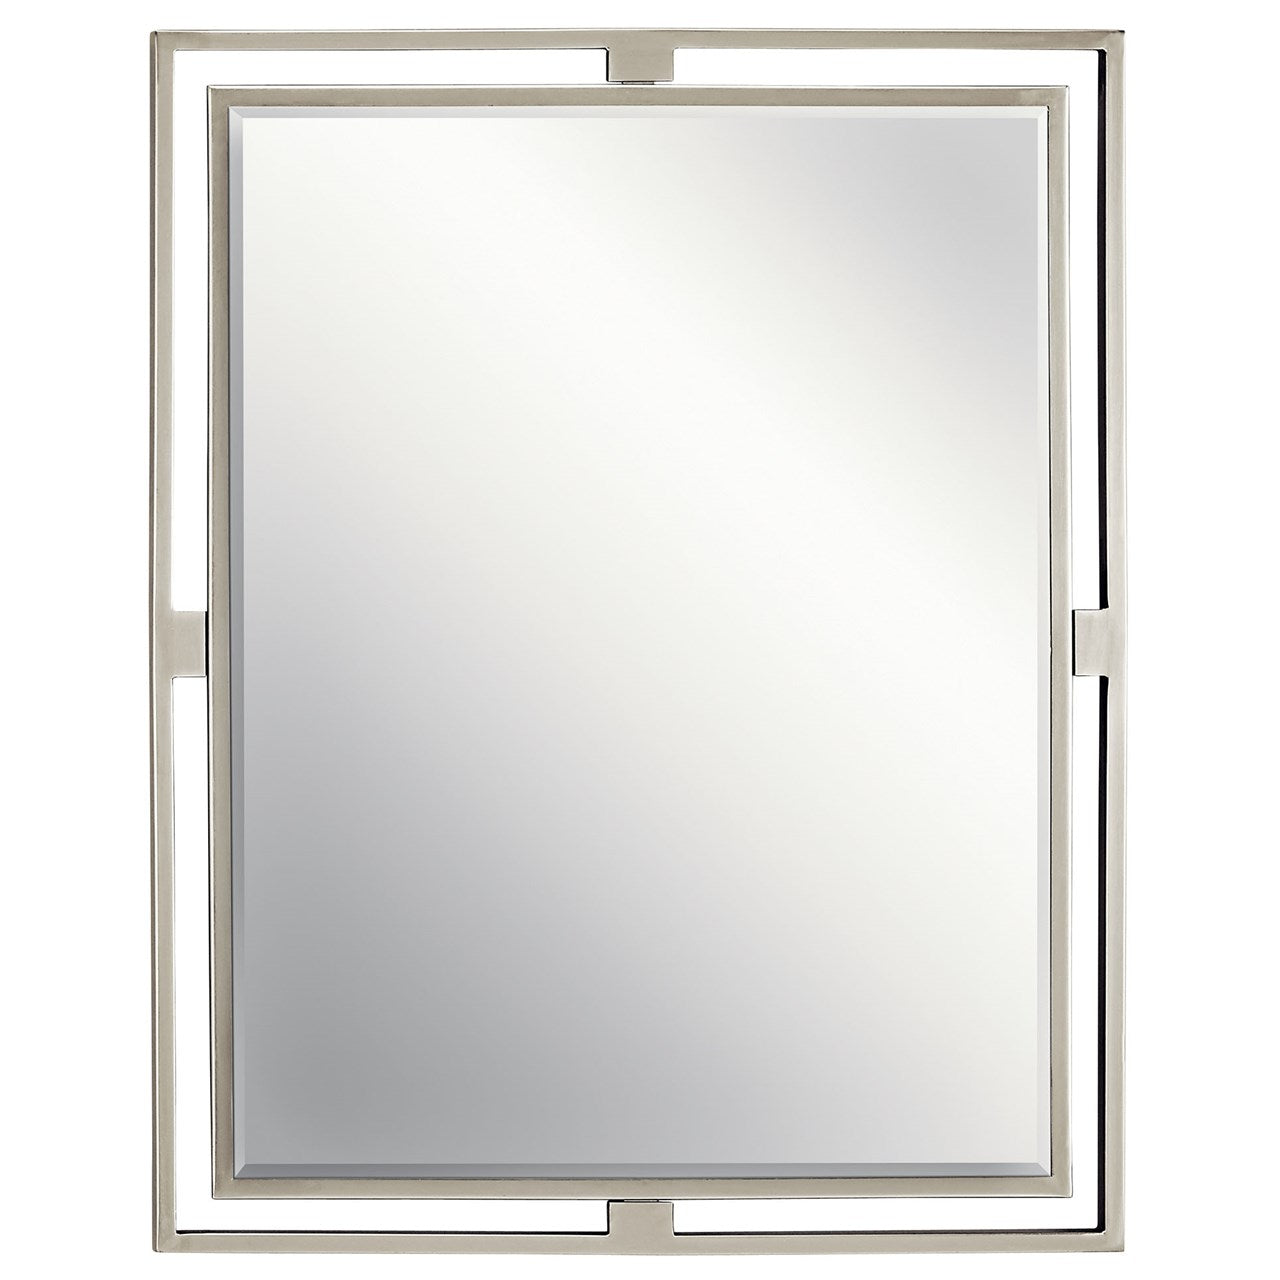 Kichler Hendrik Hendrik™ Rectangular Mirror 41071 Mirror Kichler Brushed Nickel  